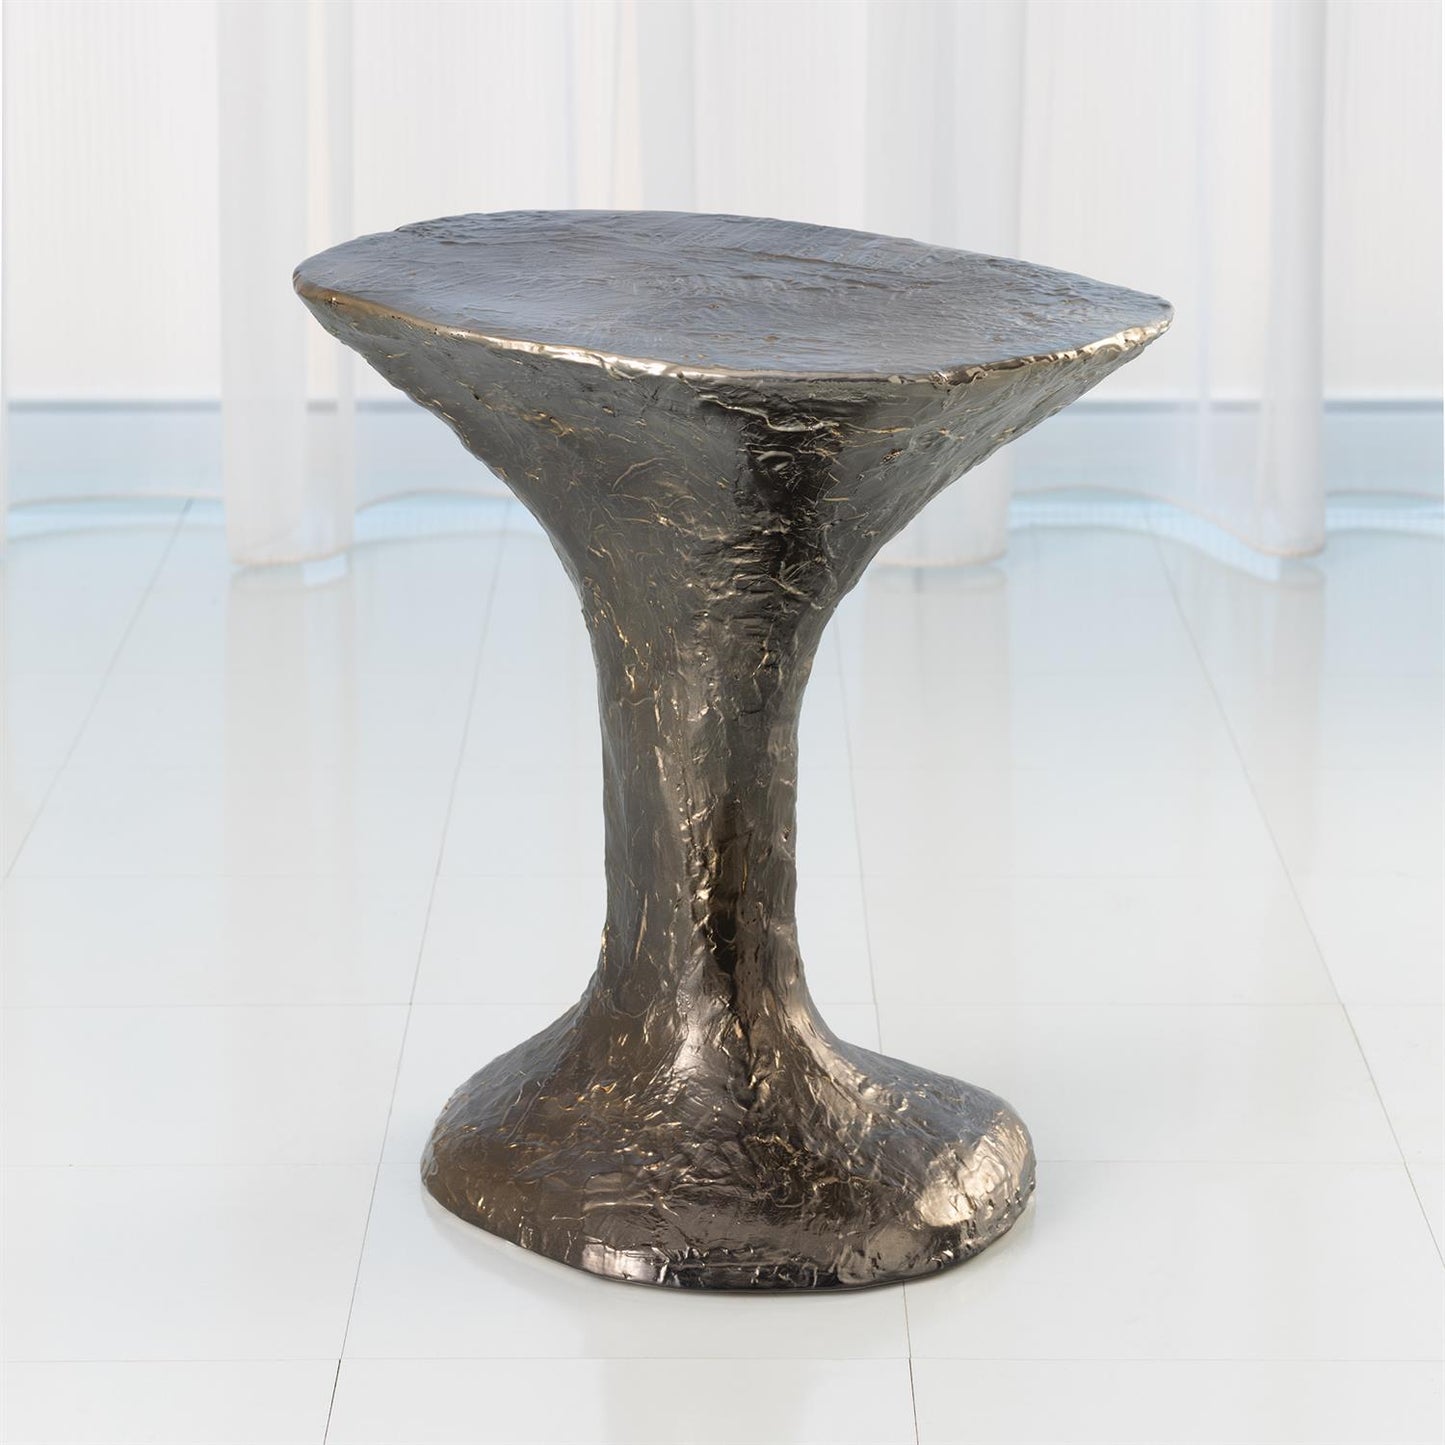 Primitive Accent Table - Reactive Bronze - Grats Decor Interior Design & Build Inc.